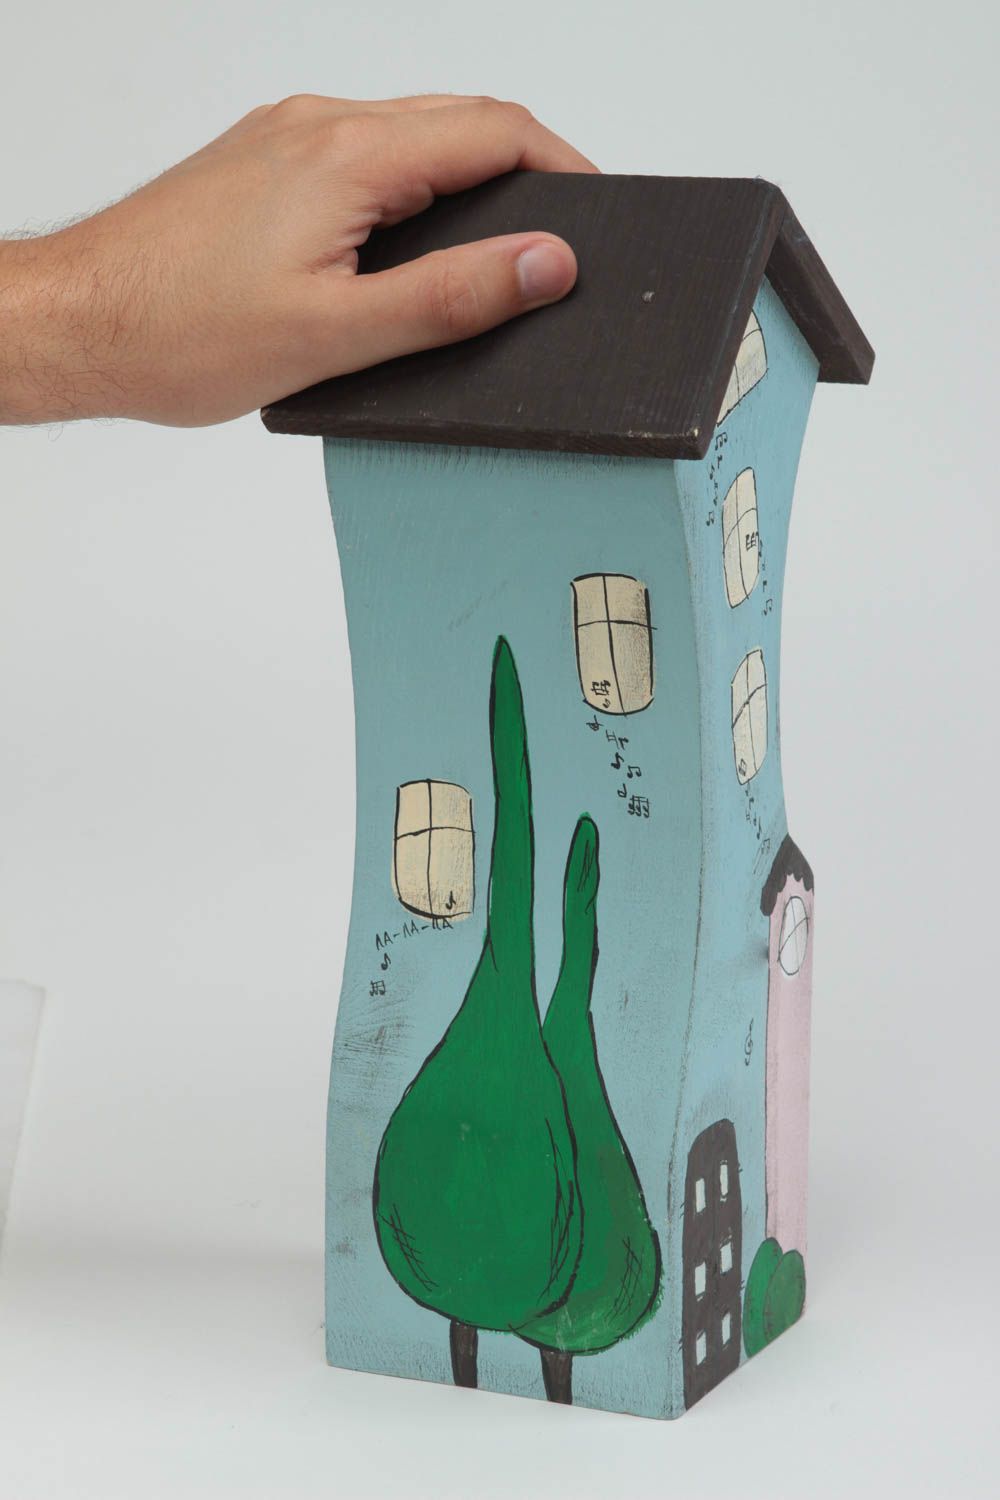 Wood sculpture homemade home decor miniature figurines housewarming gift ideas photo 5